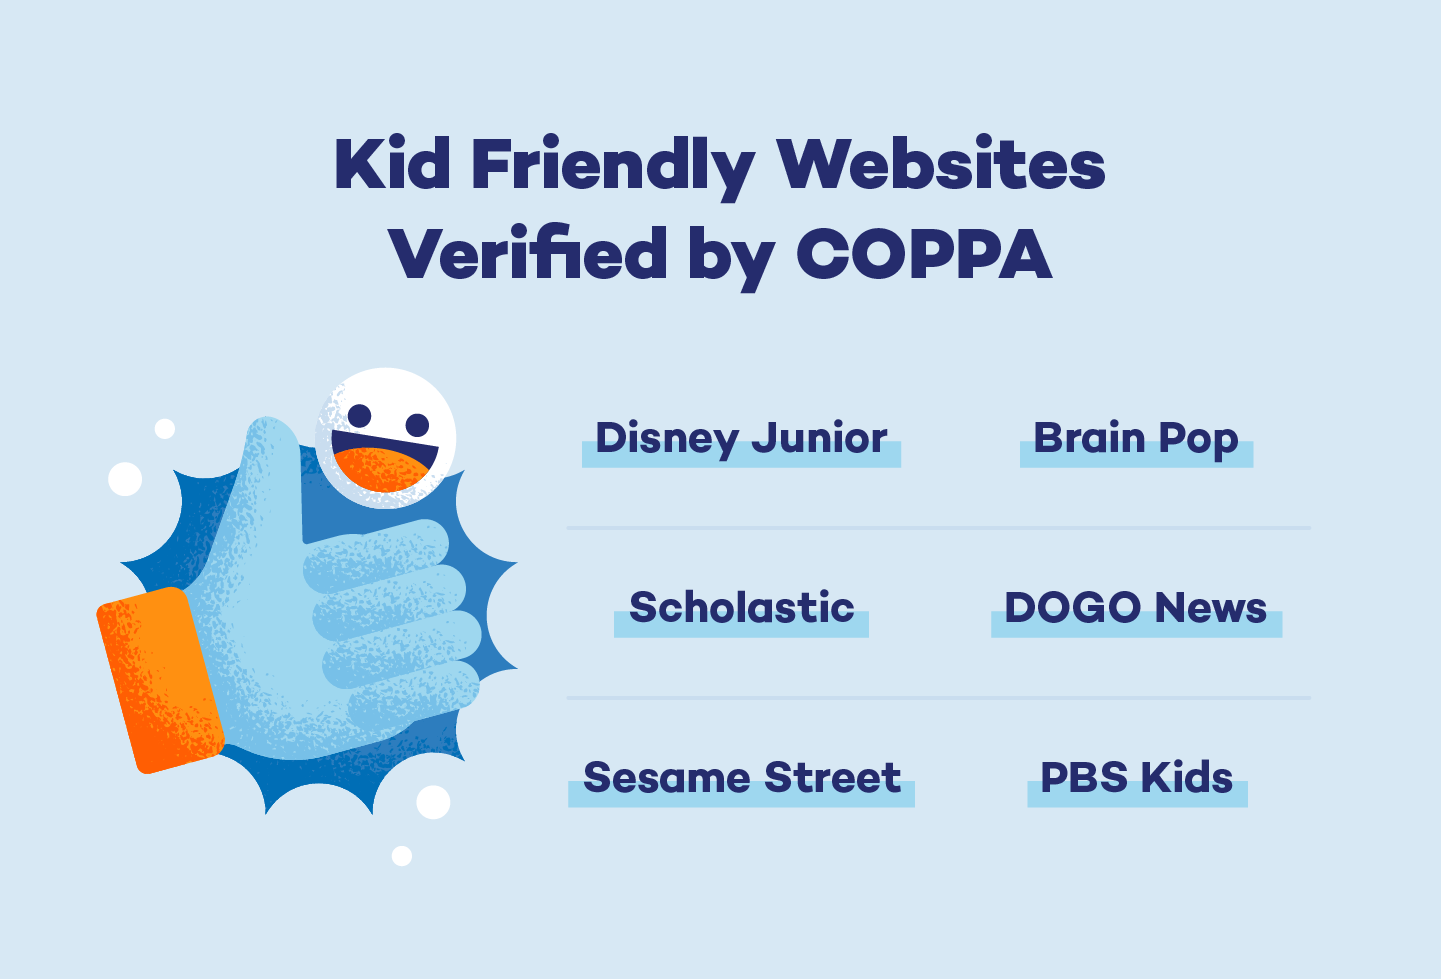 A list of kid-friendly websites verified by COPPA